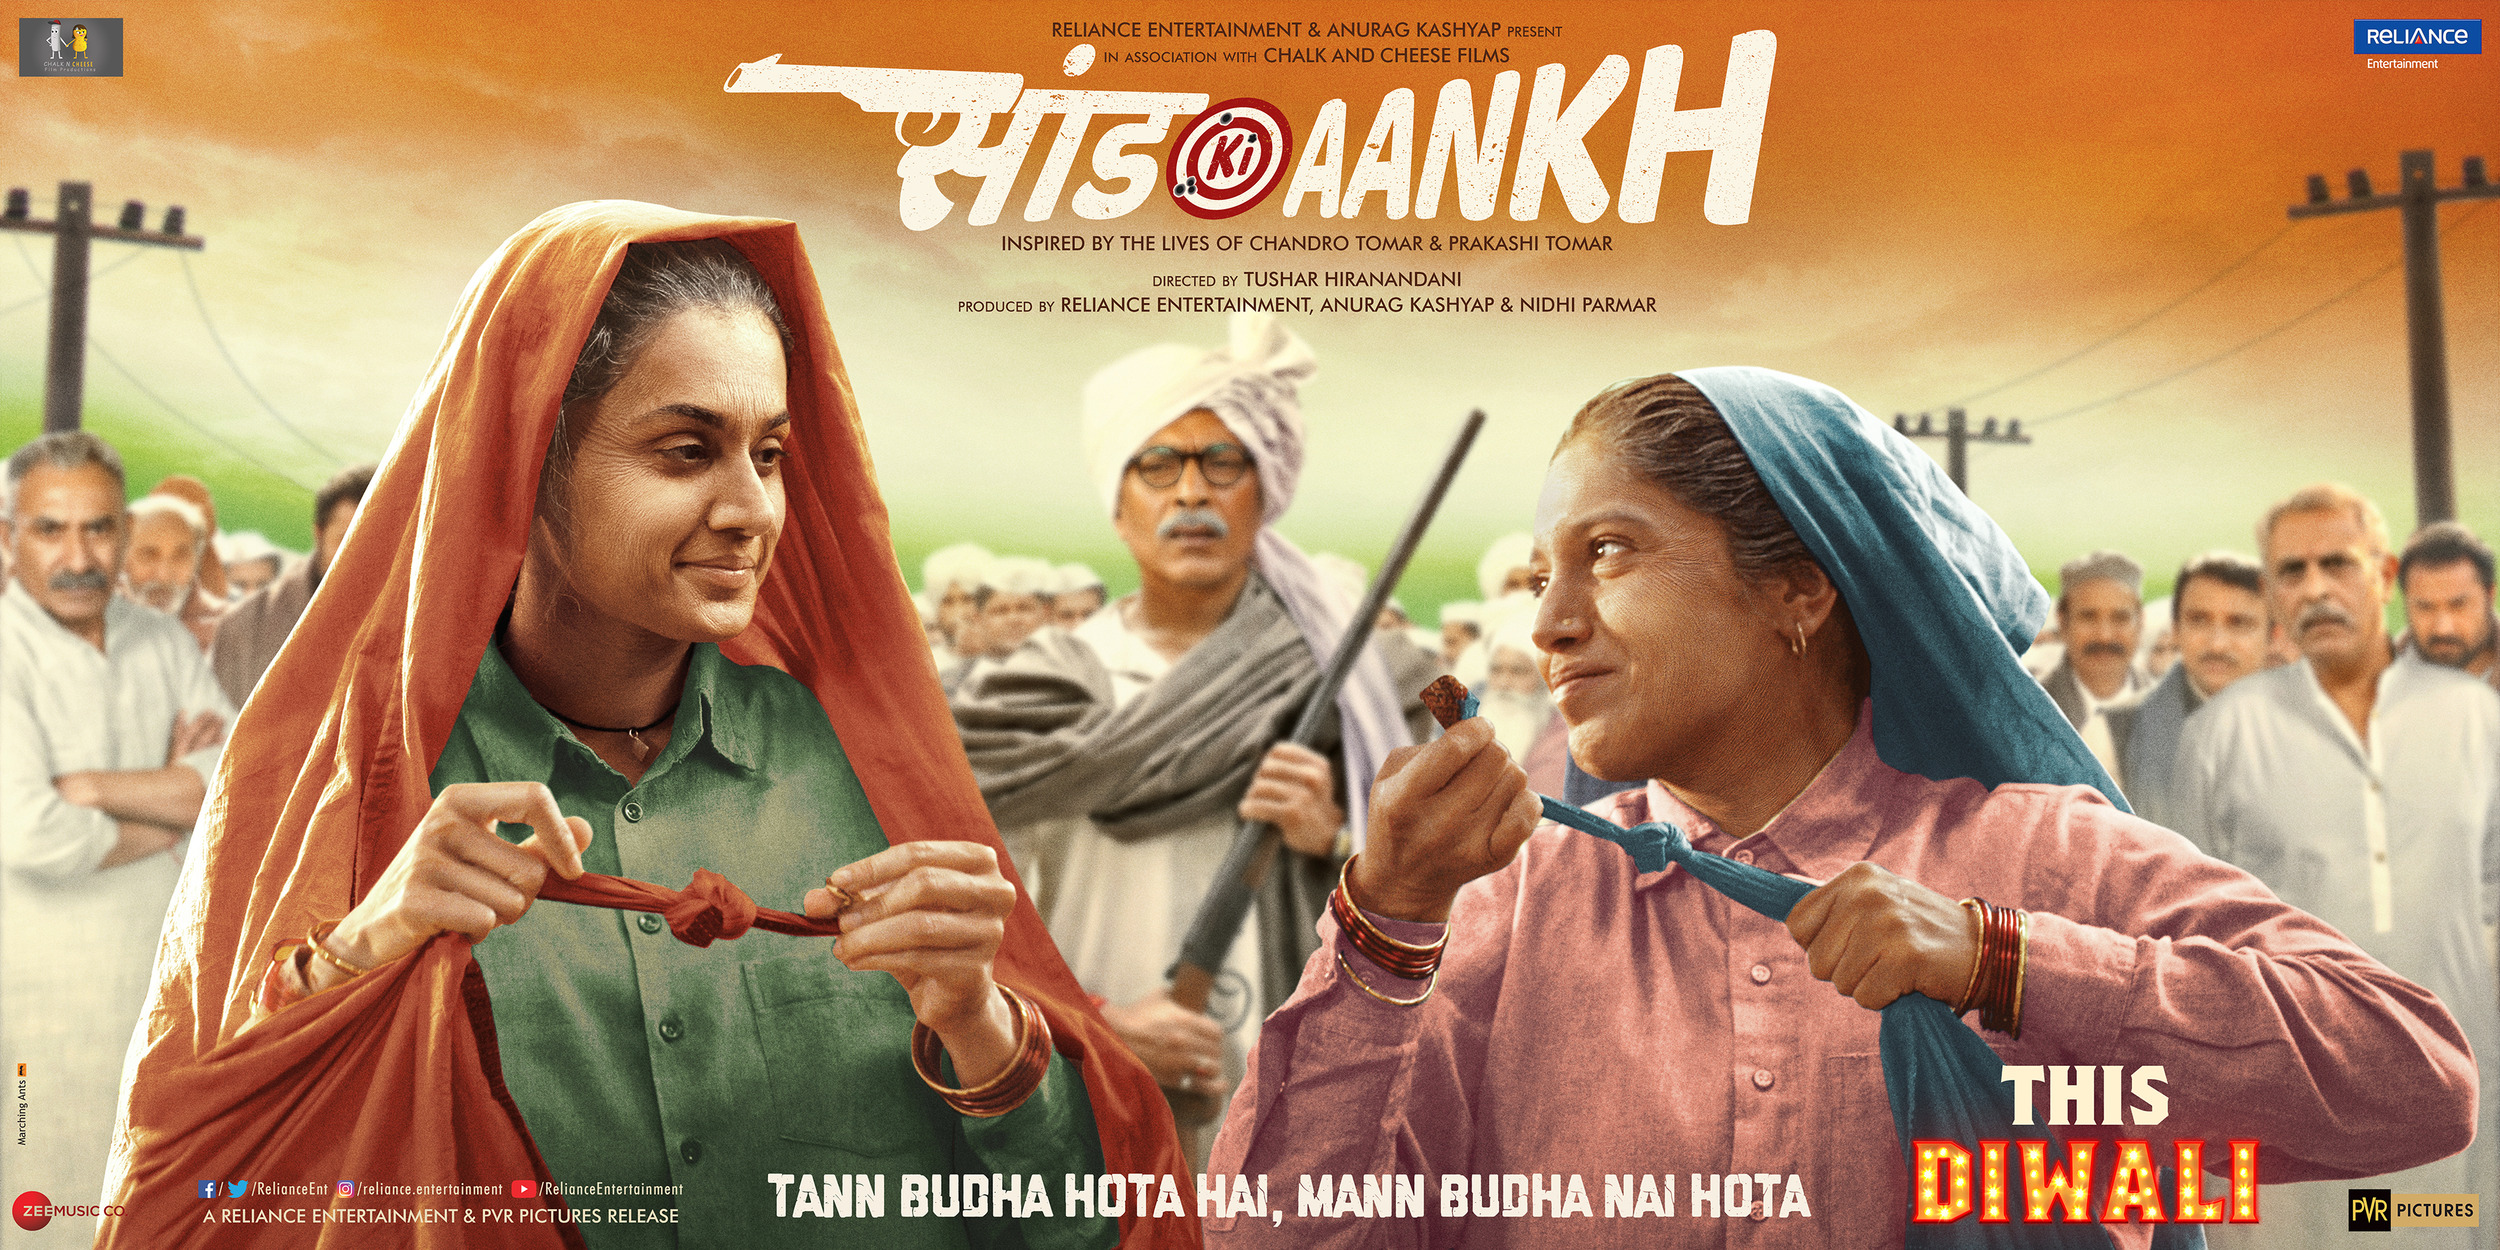 Mega Sized Movie Poster Image for Saand Ki Aankh (#4 of 4)